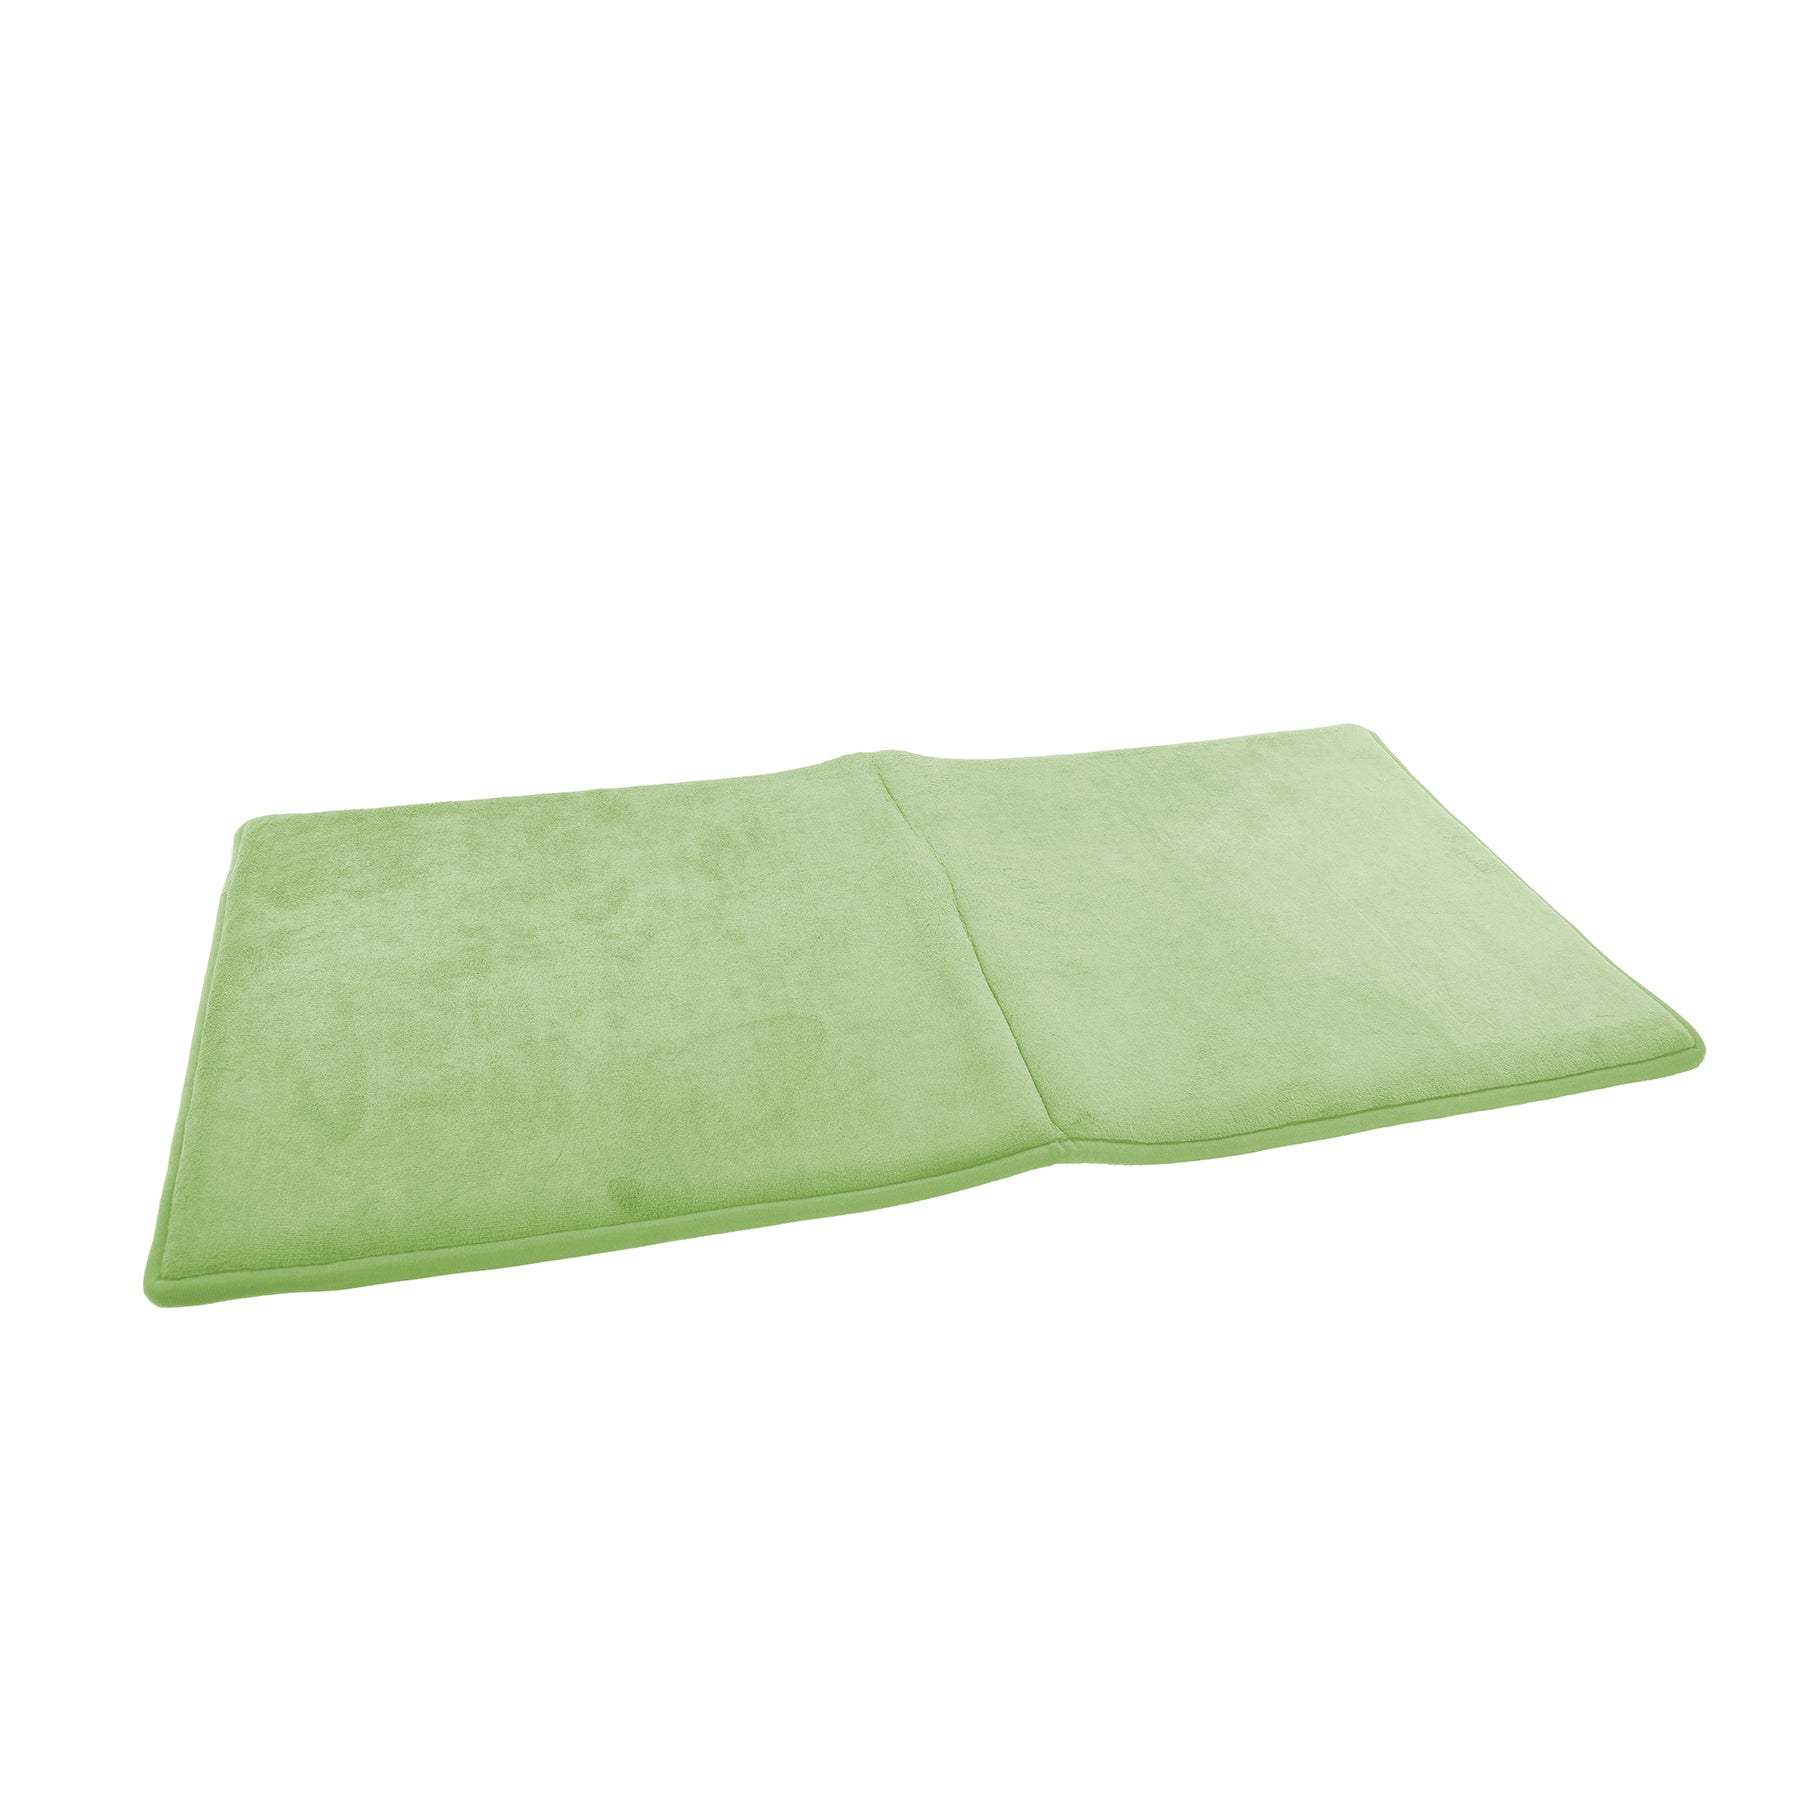 Floor Mat Memory Foam - Light Green Color